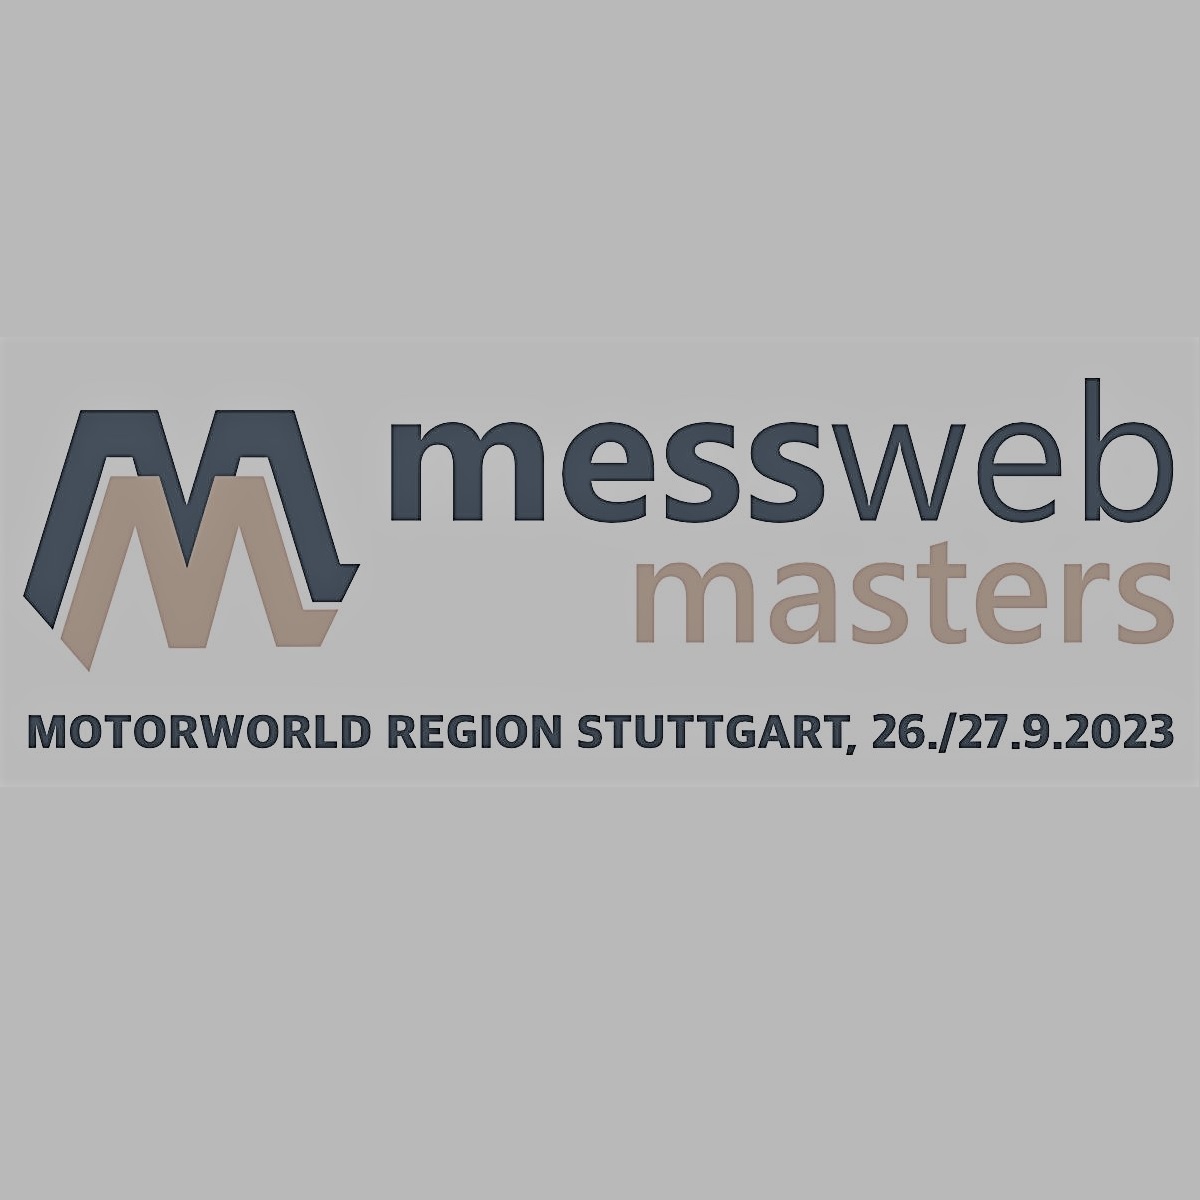 Messe Messweb masters